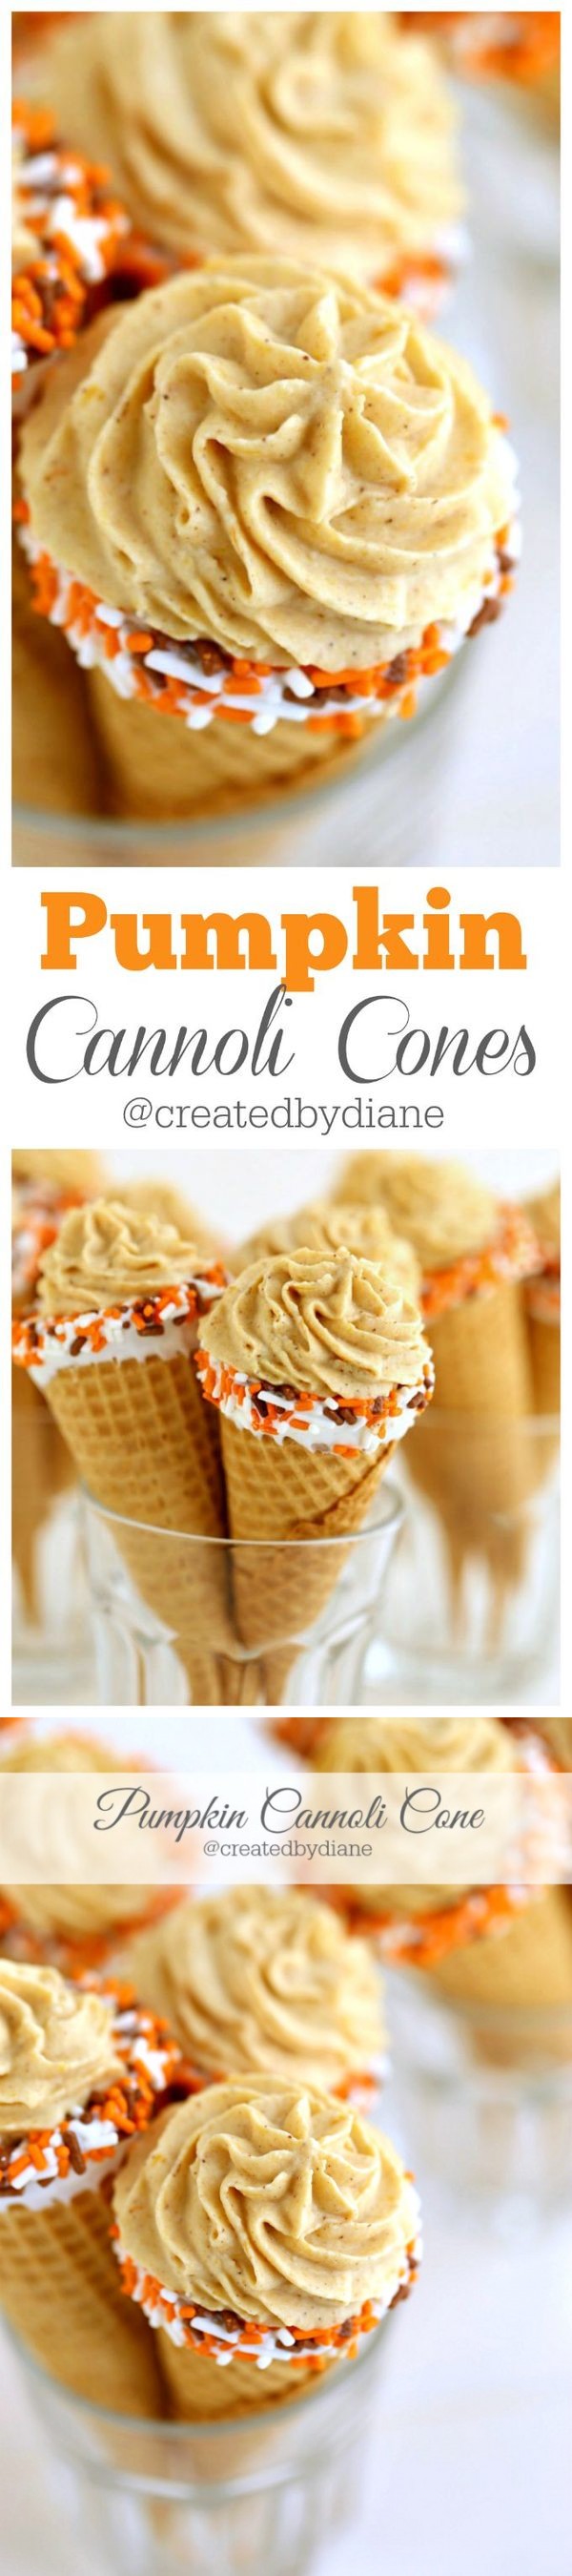 Pumpkin Cannoli Cones